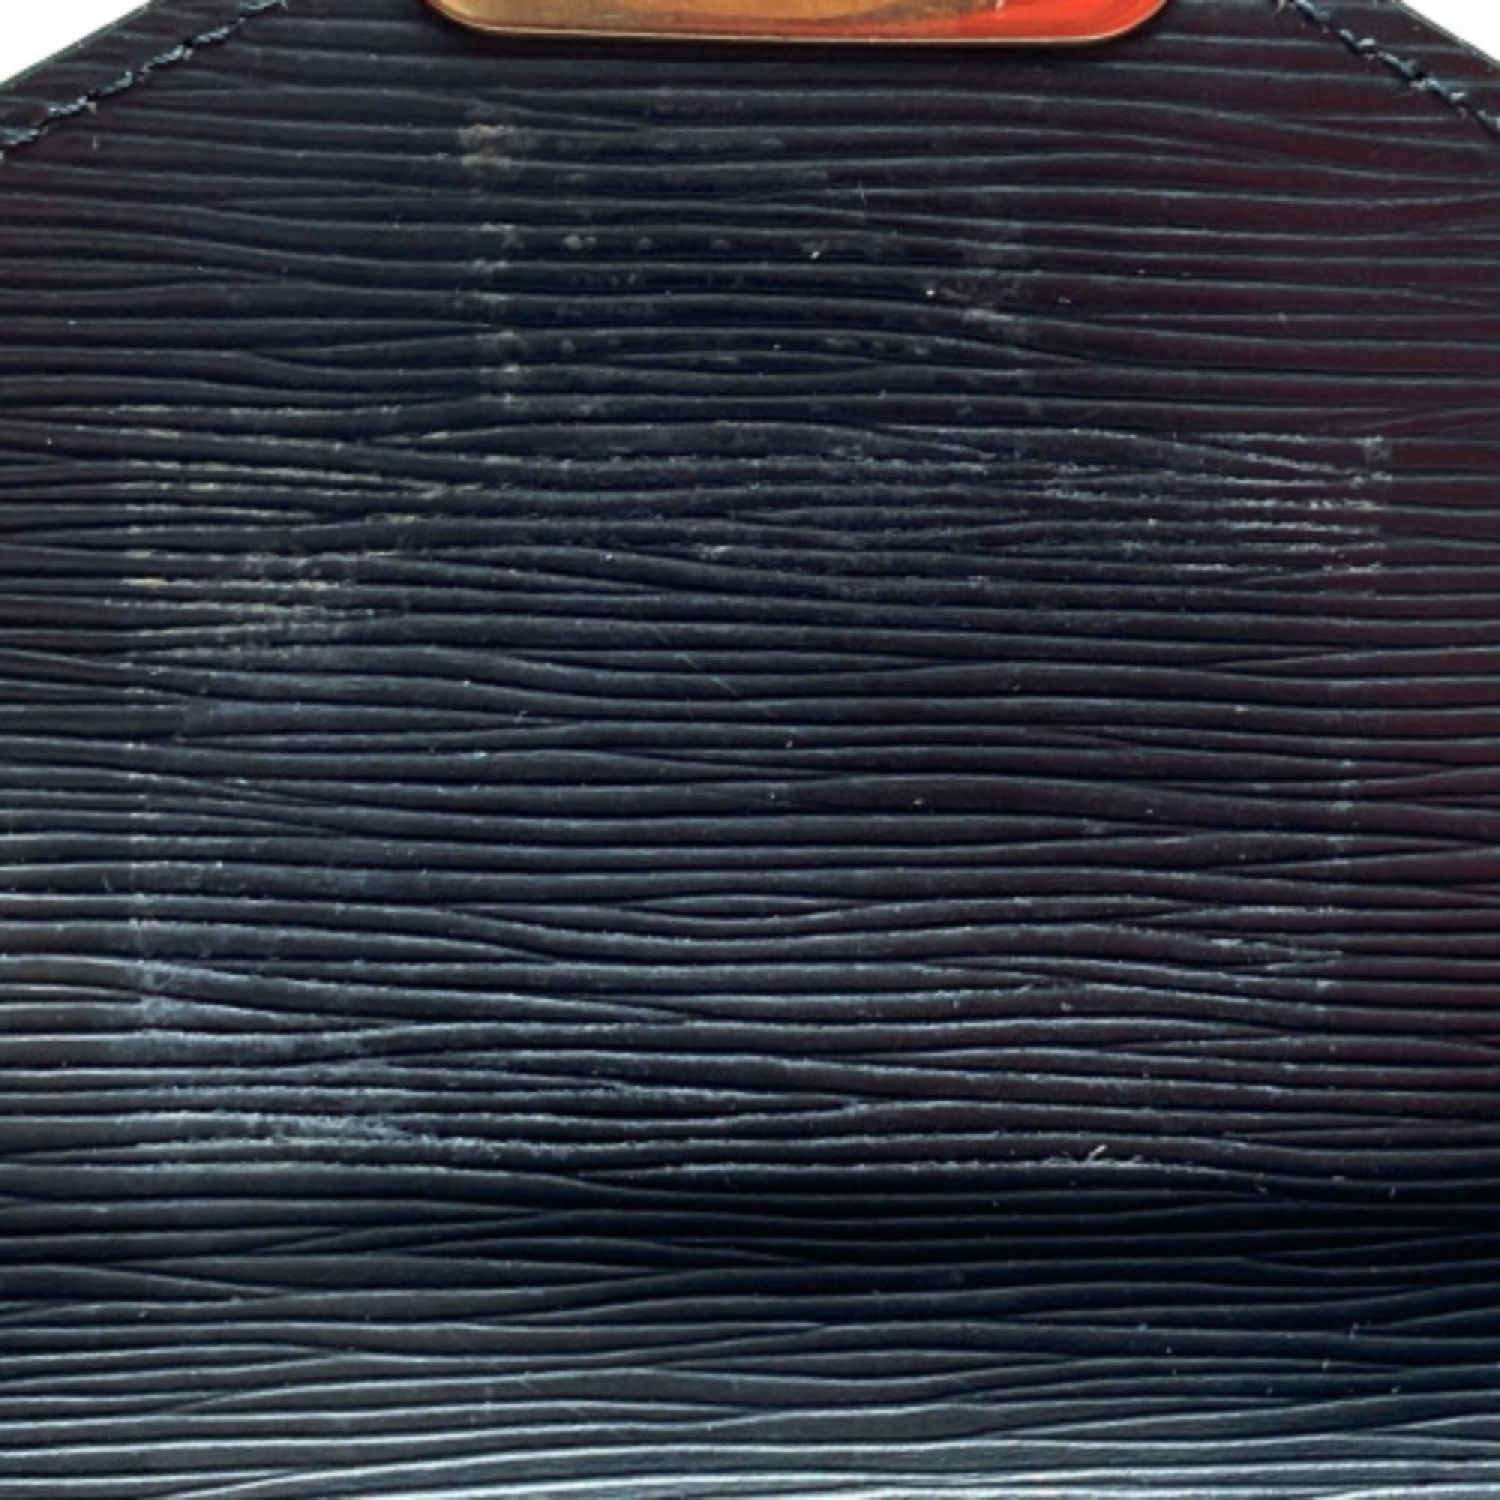 ◎◎LOUIS VUITTON ルイヴィトン エピ セリエ・ドラゴンヌ M52612 ブラック セカンドバッグ ジャンク